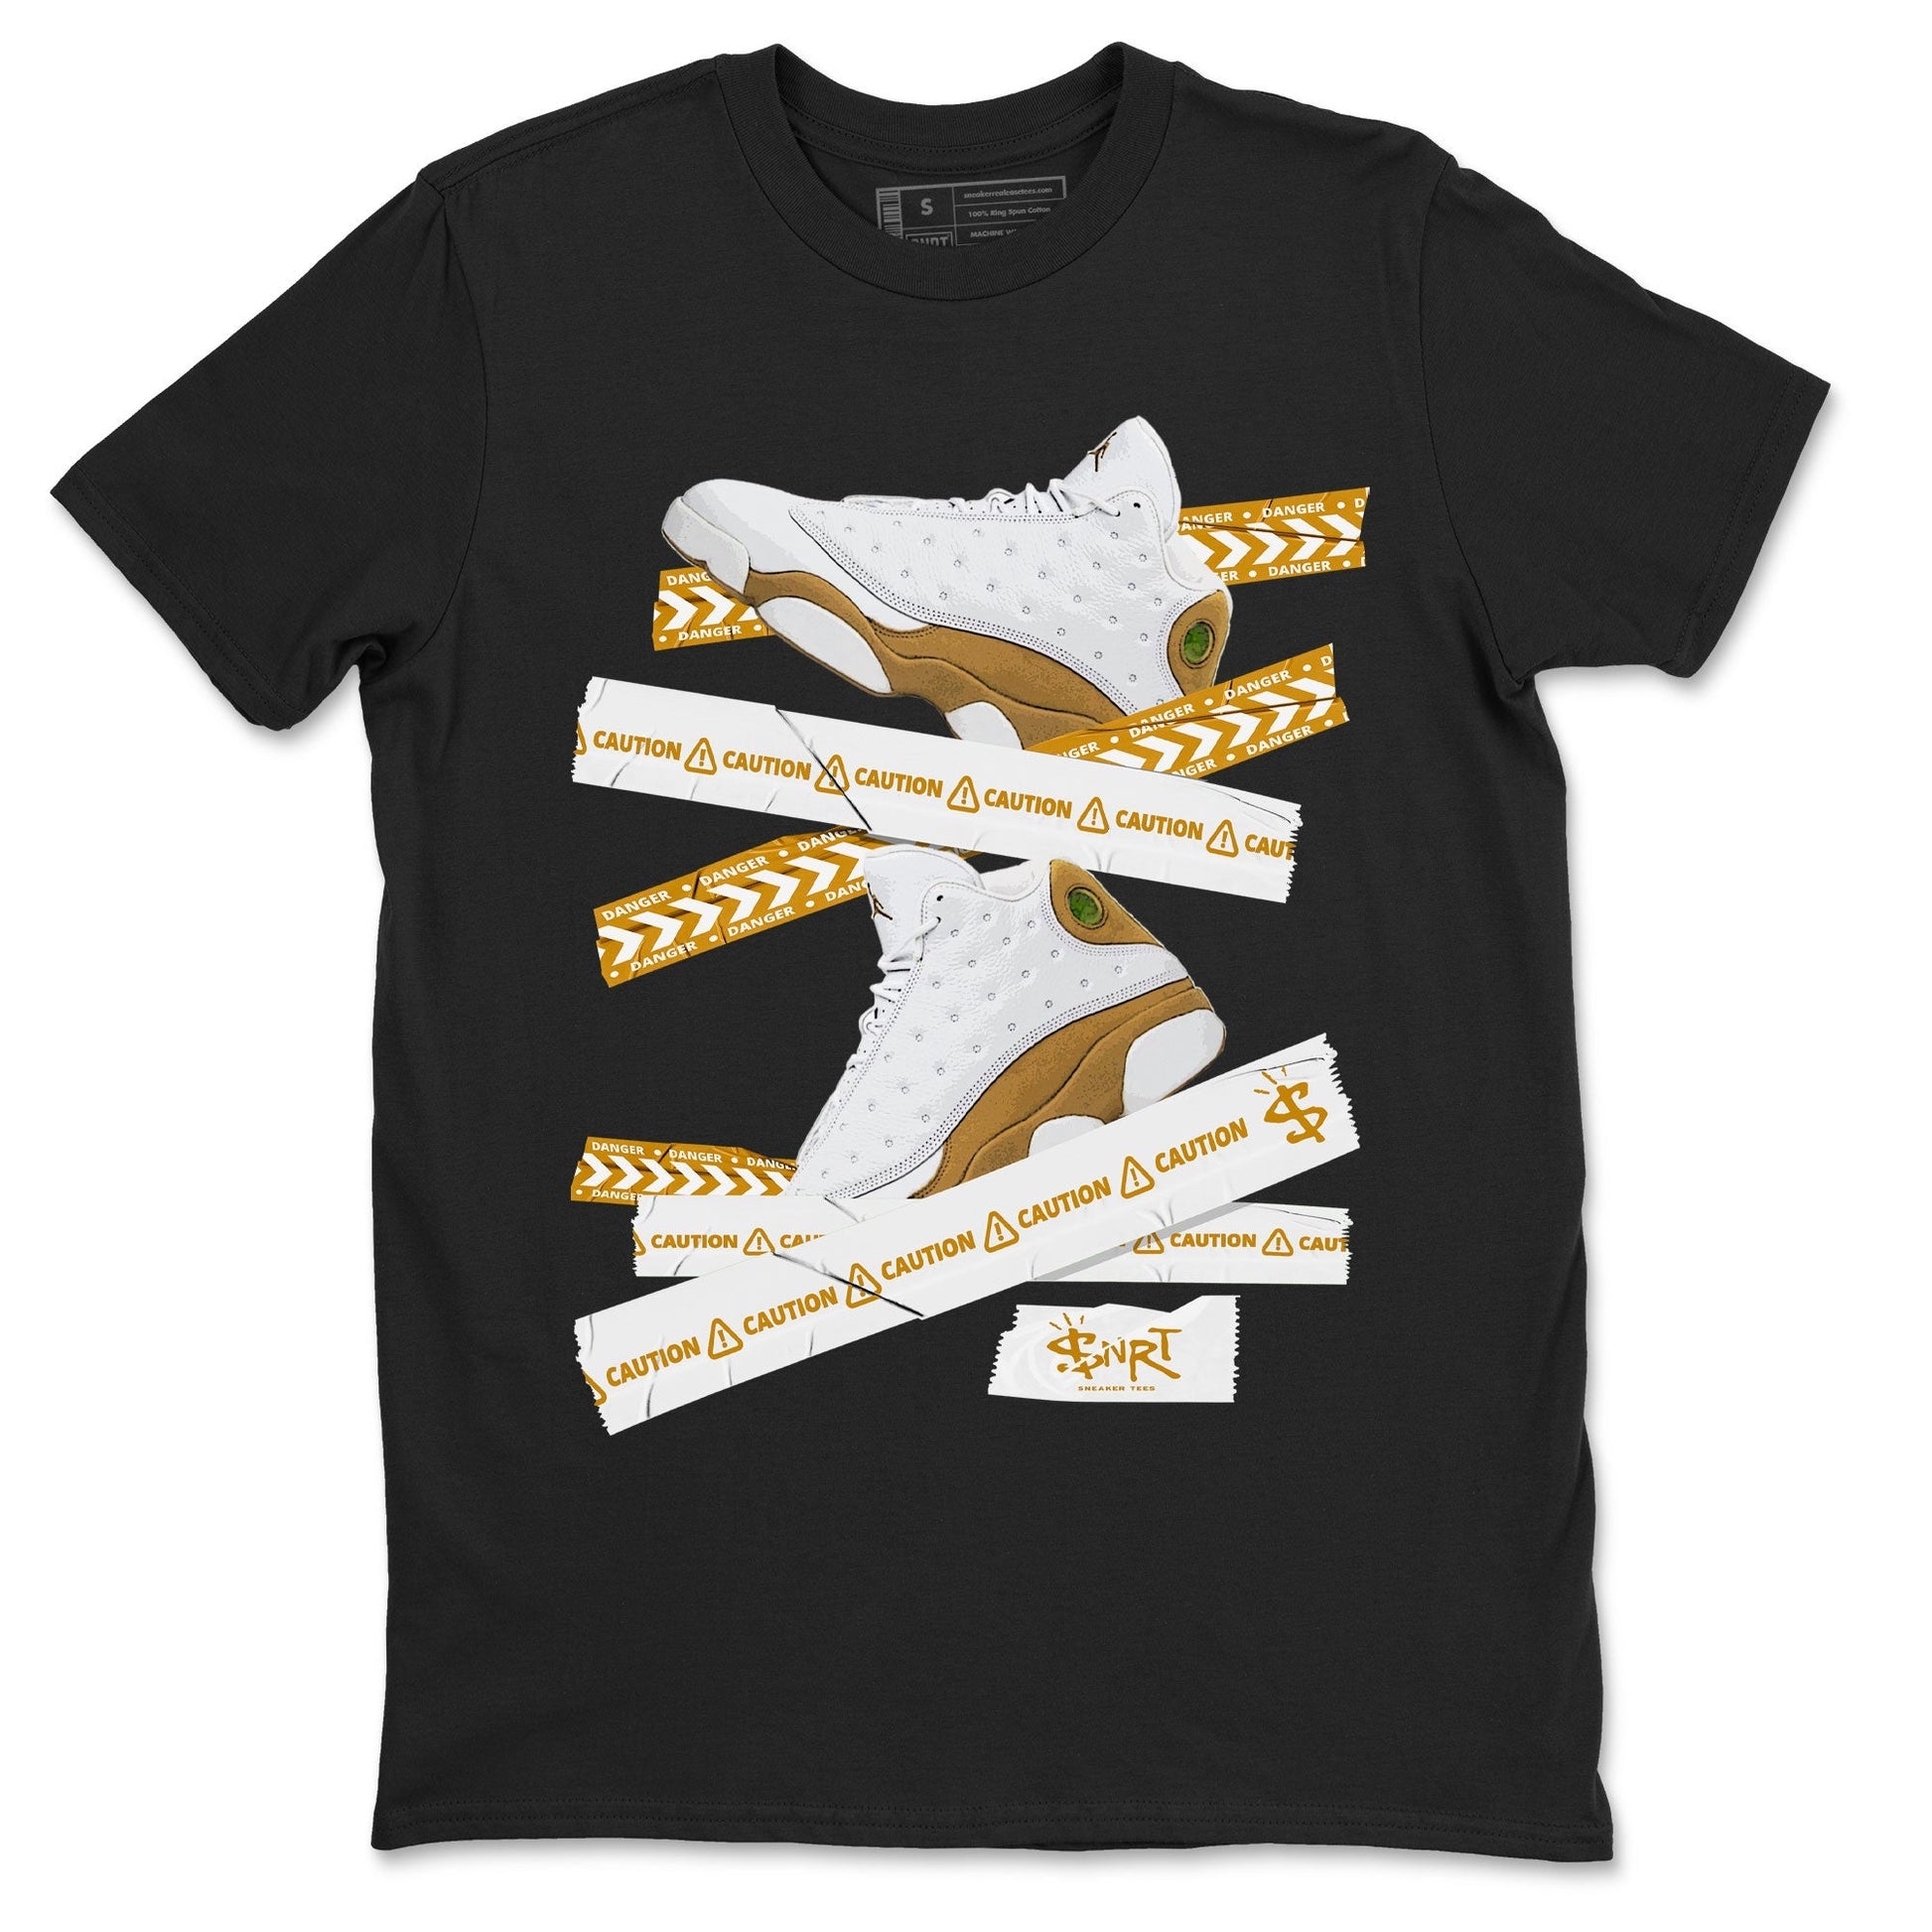 Air Jordan 13 Wheat shirt to match jordans Caution Tape Streetwear Sneaker Shirt 13 Wheat Drip Gear Zone Sneaker Matching Clothing Unisex Black 2 T-Shirt